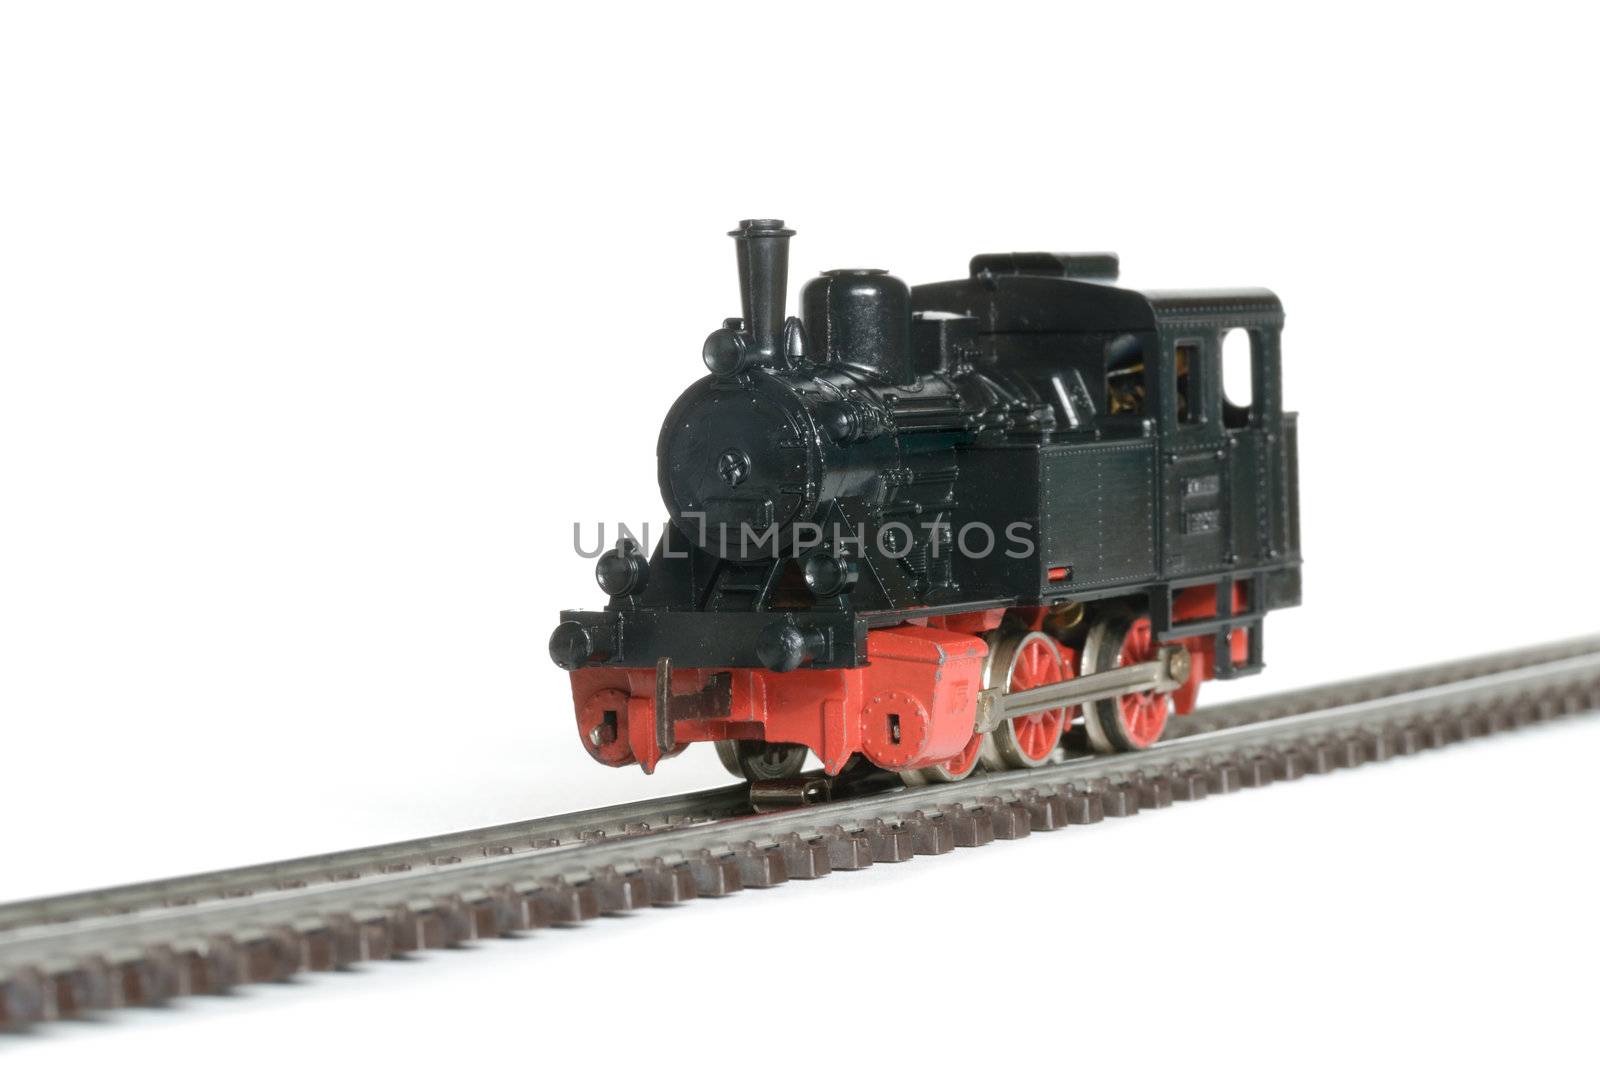 Vintage western model railway over white background